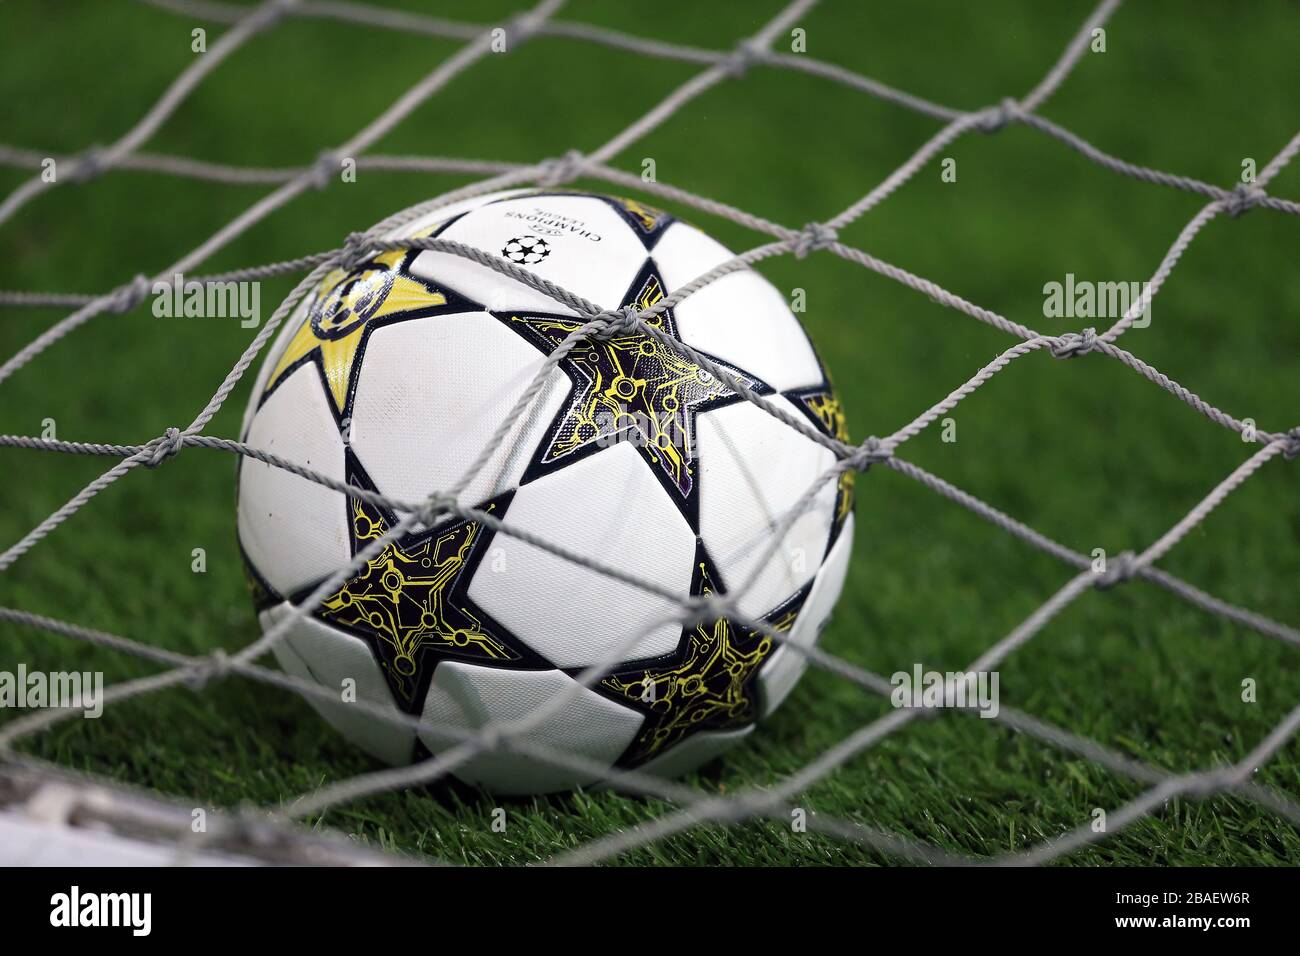 Spieltag der UEFA Champions League Stockfotografie - Alamy